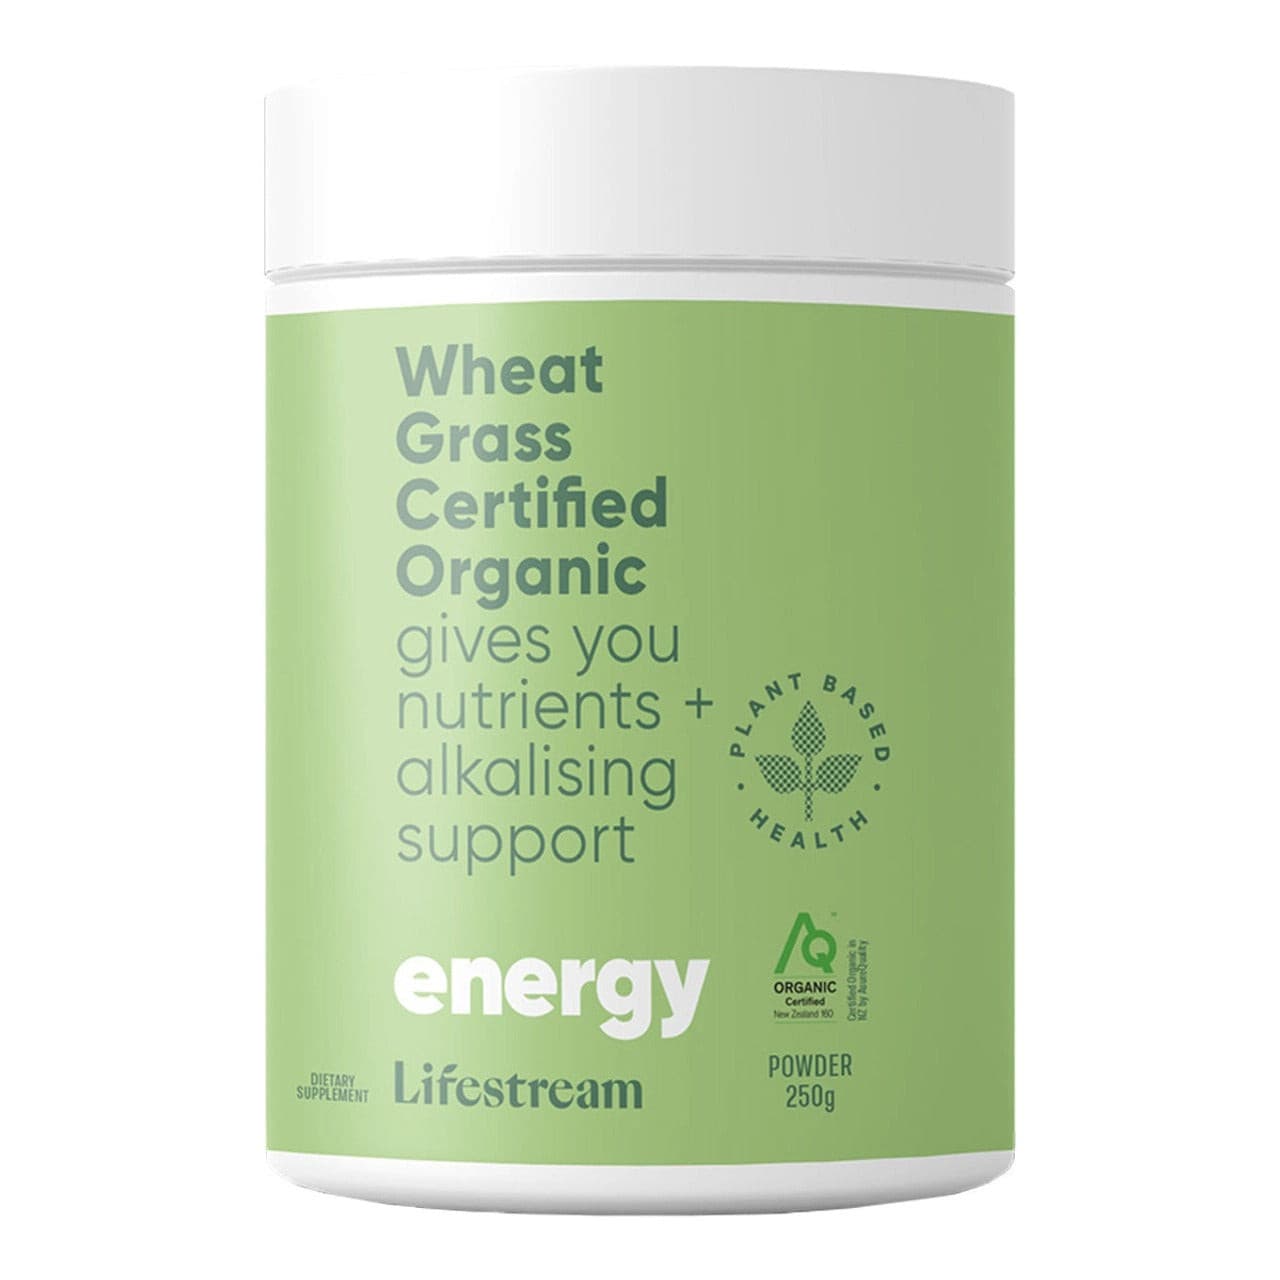 Lifestream Wheat Grass Certified Organic.